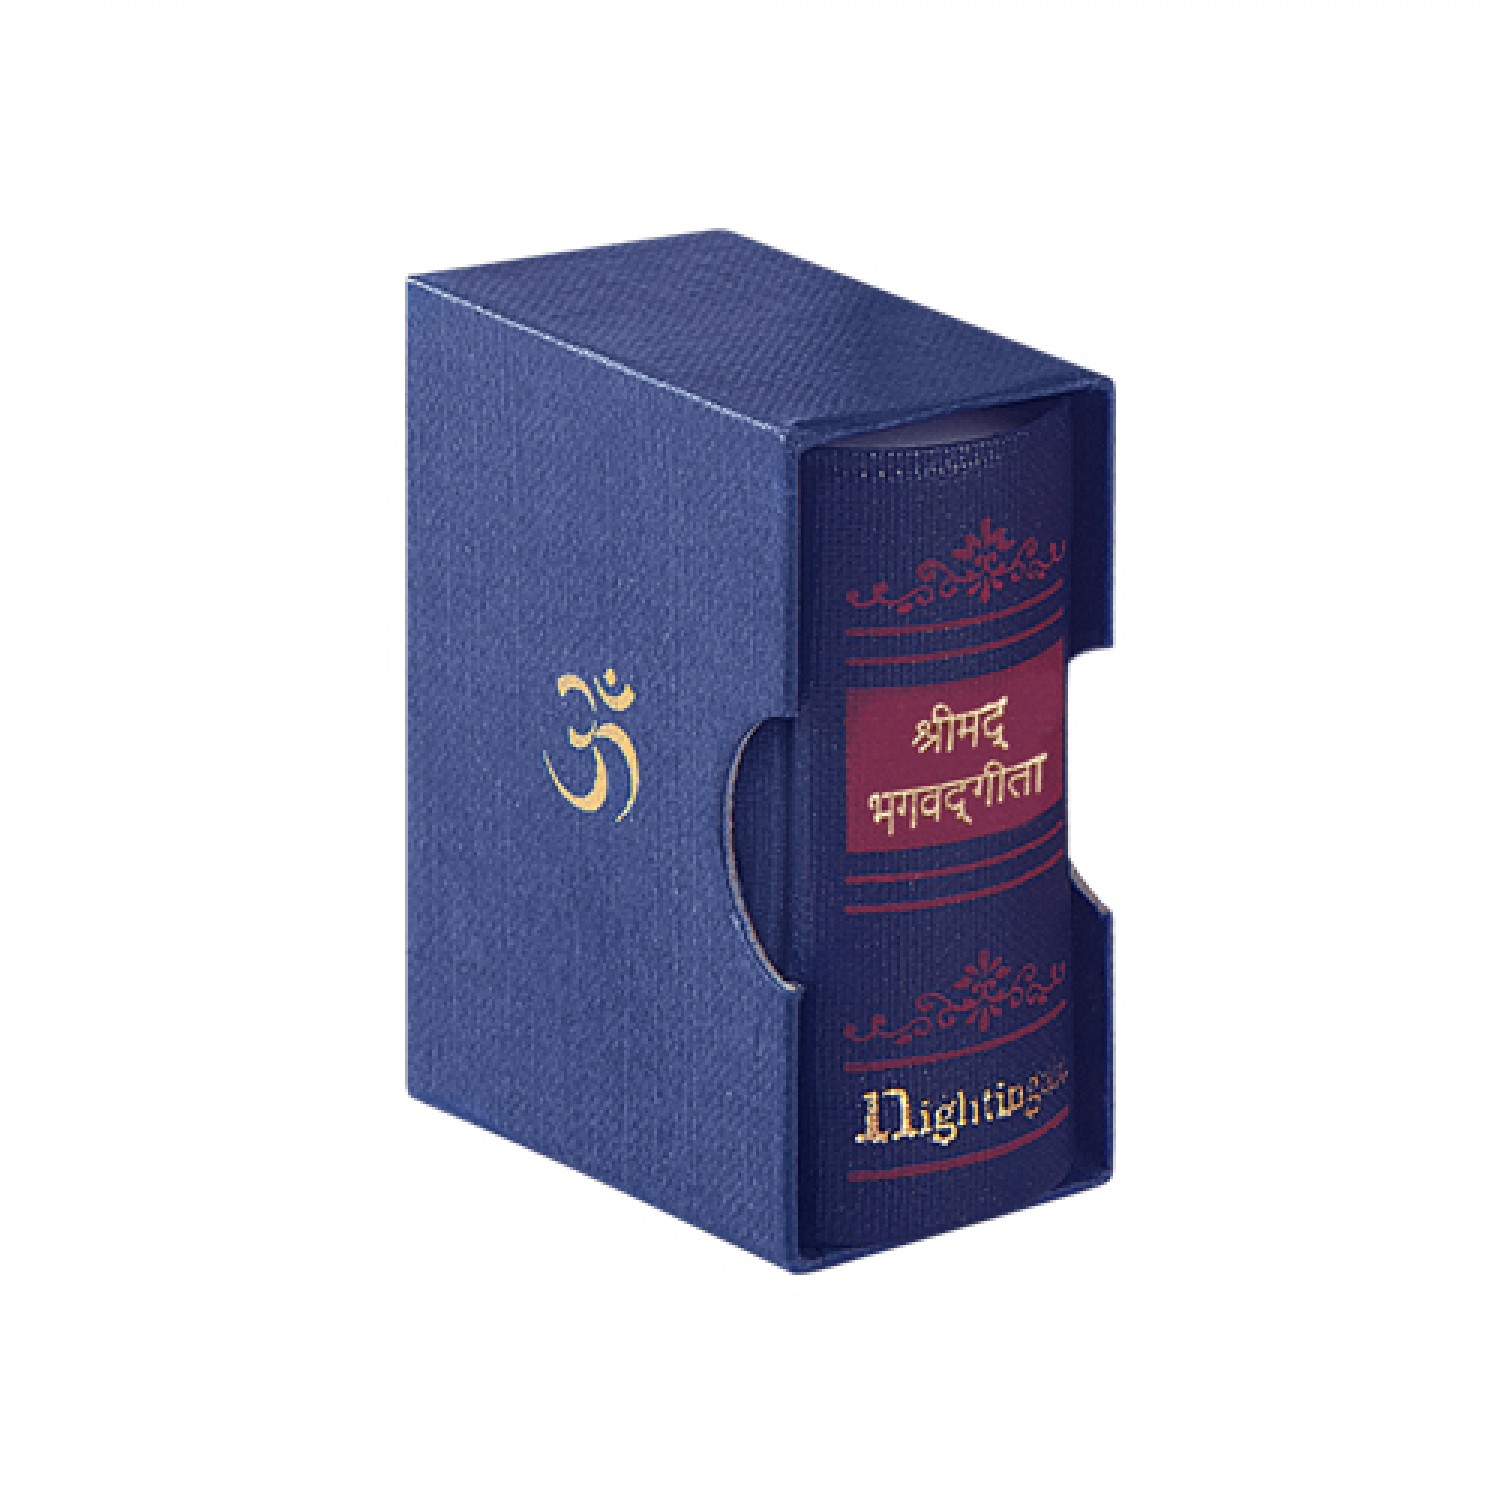 bhagavad-gita-a9-hindi-pocket-edition